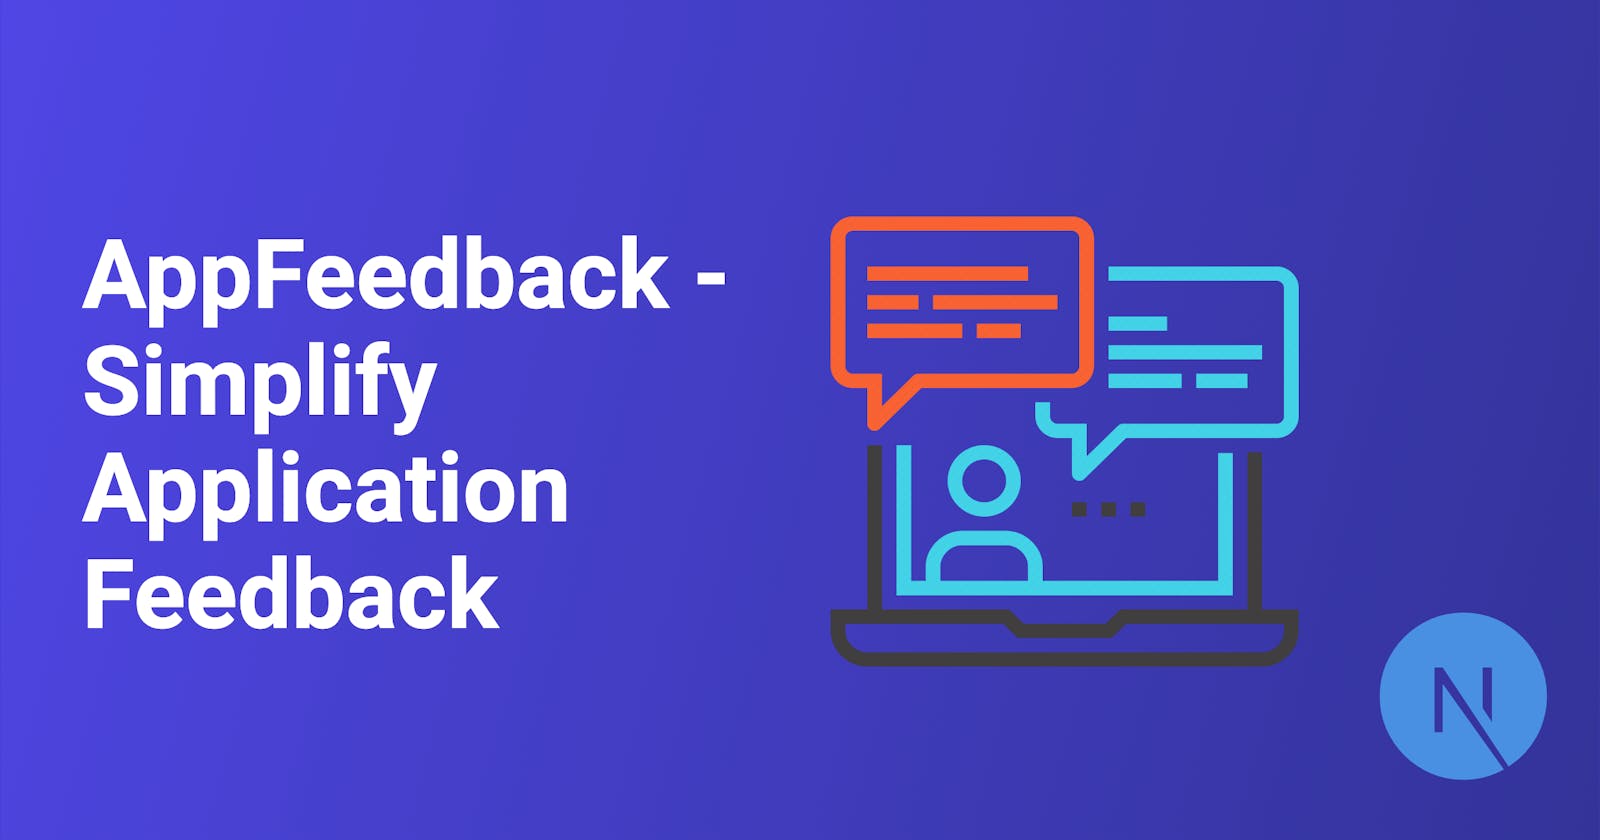 AppFeedback - Simplify Your Customer Feedback